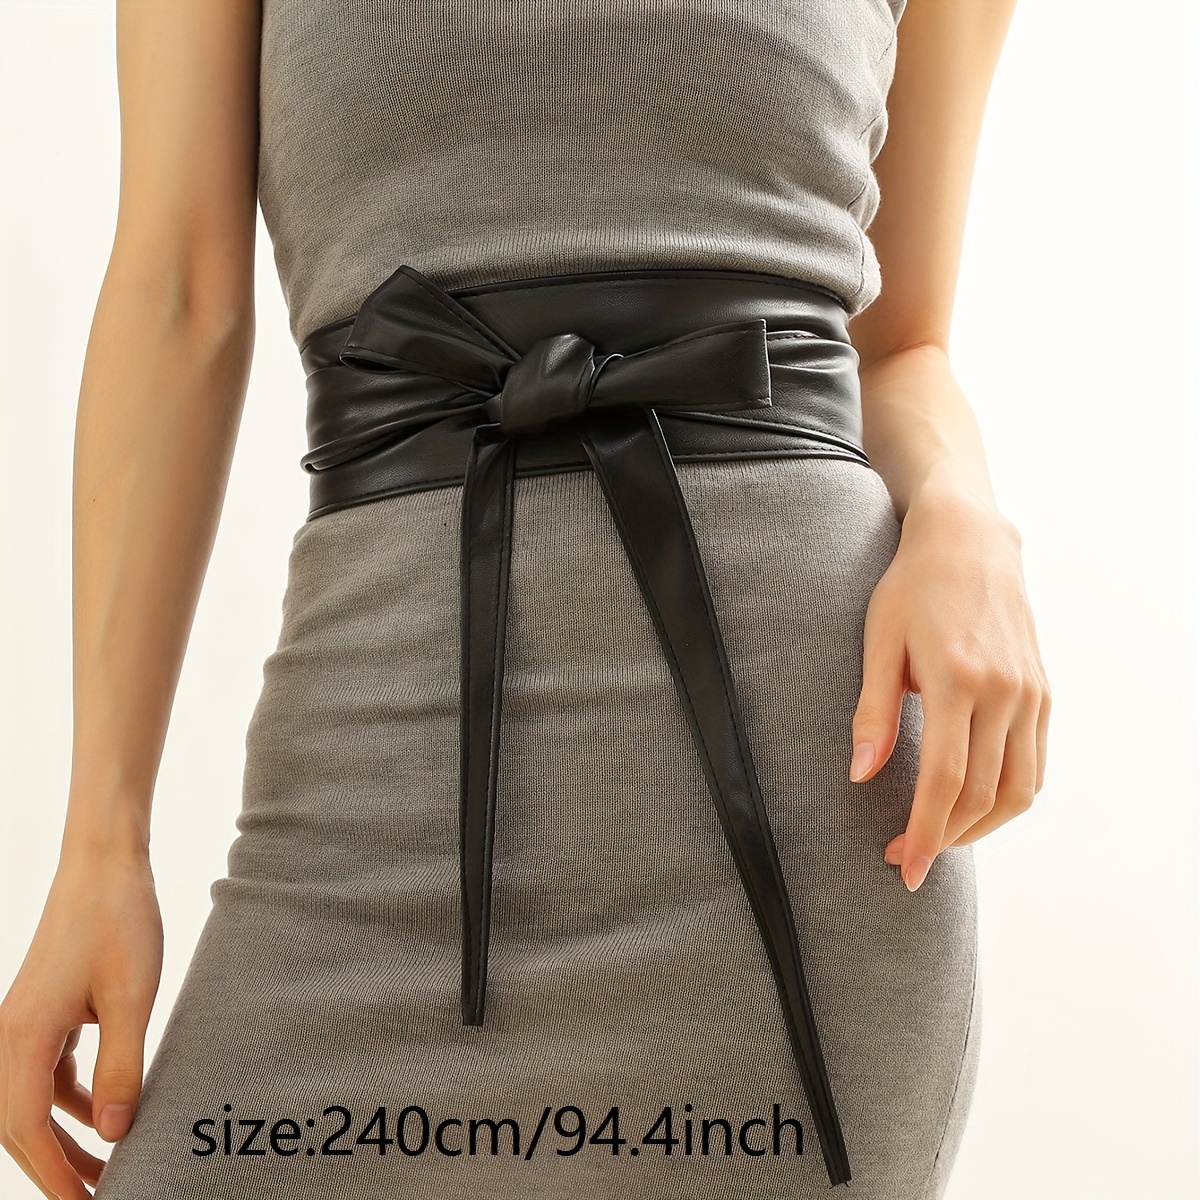 Nice-looking waist is a cinch